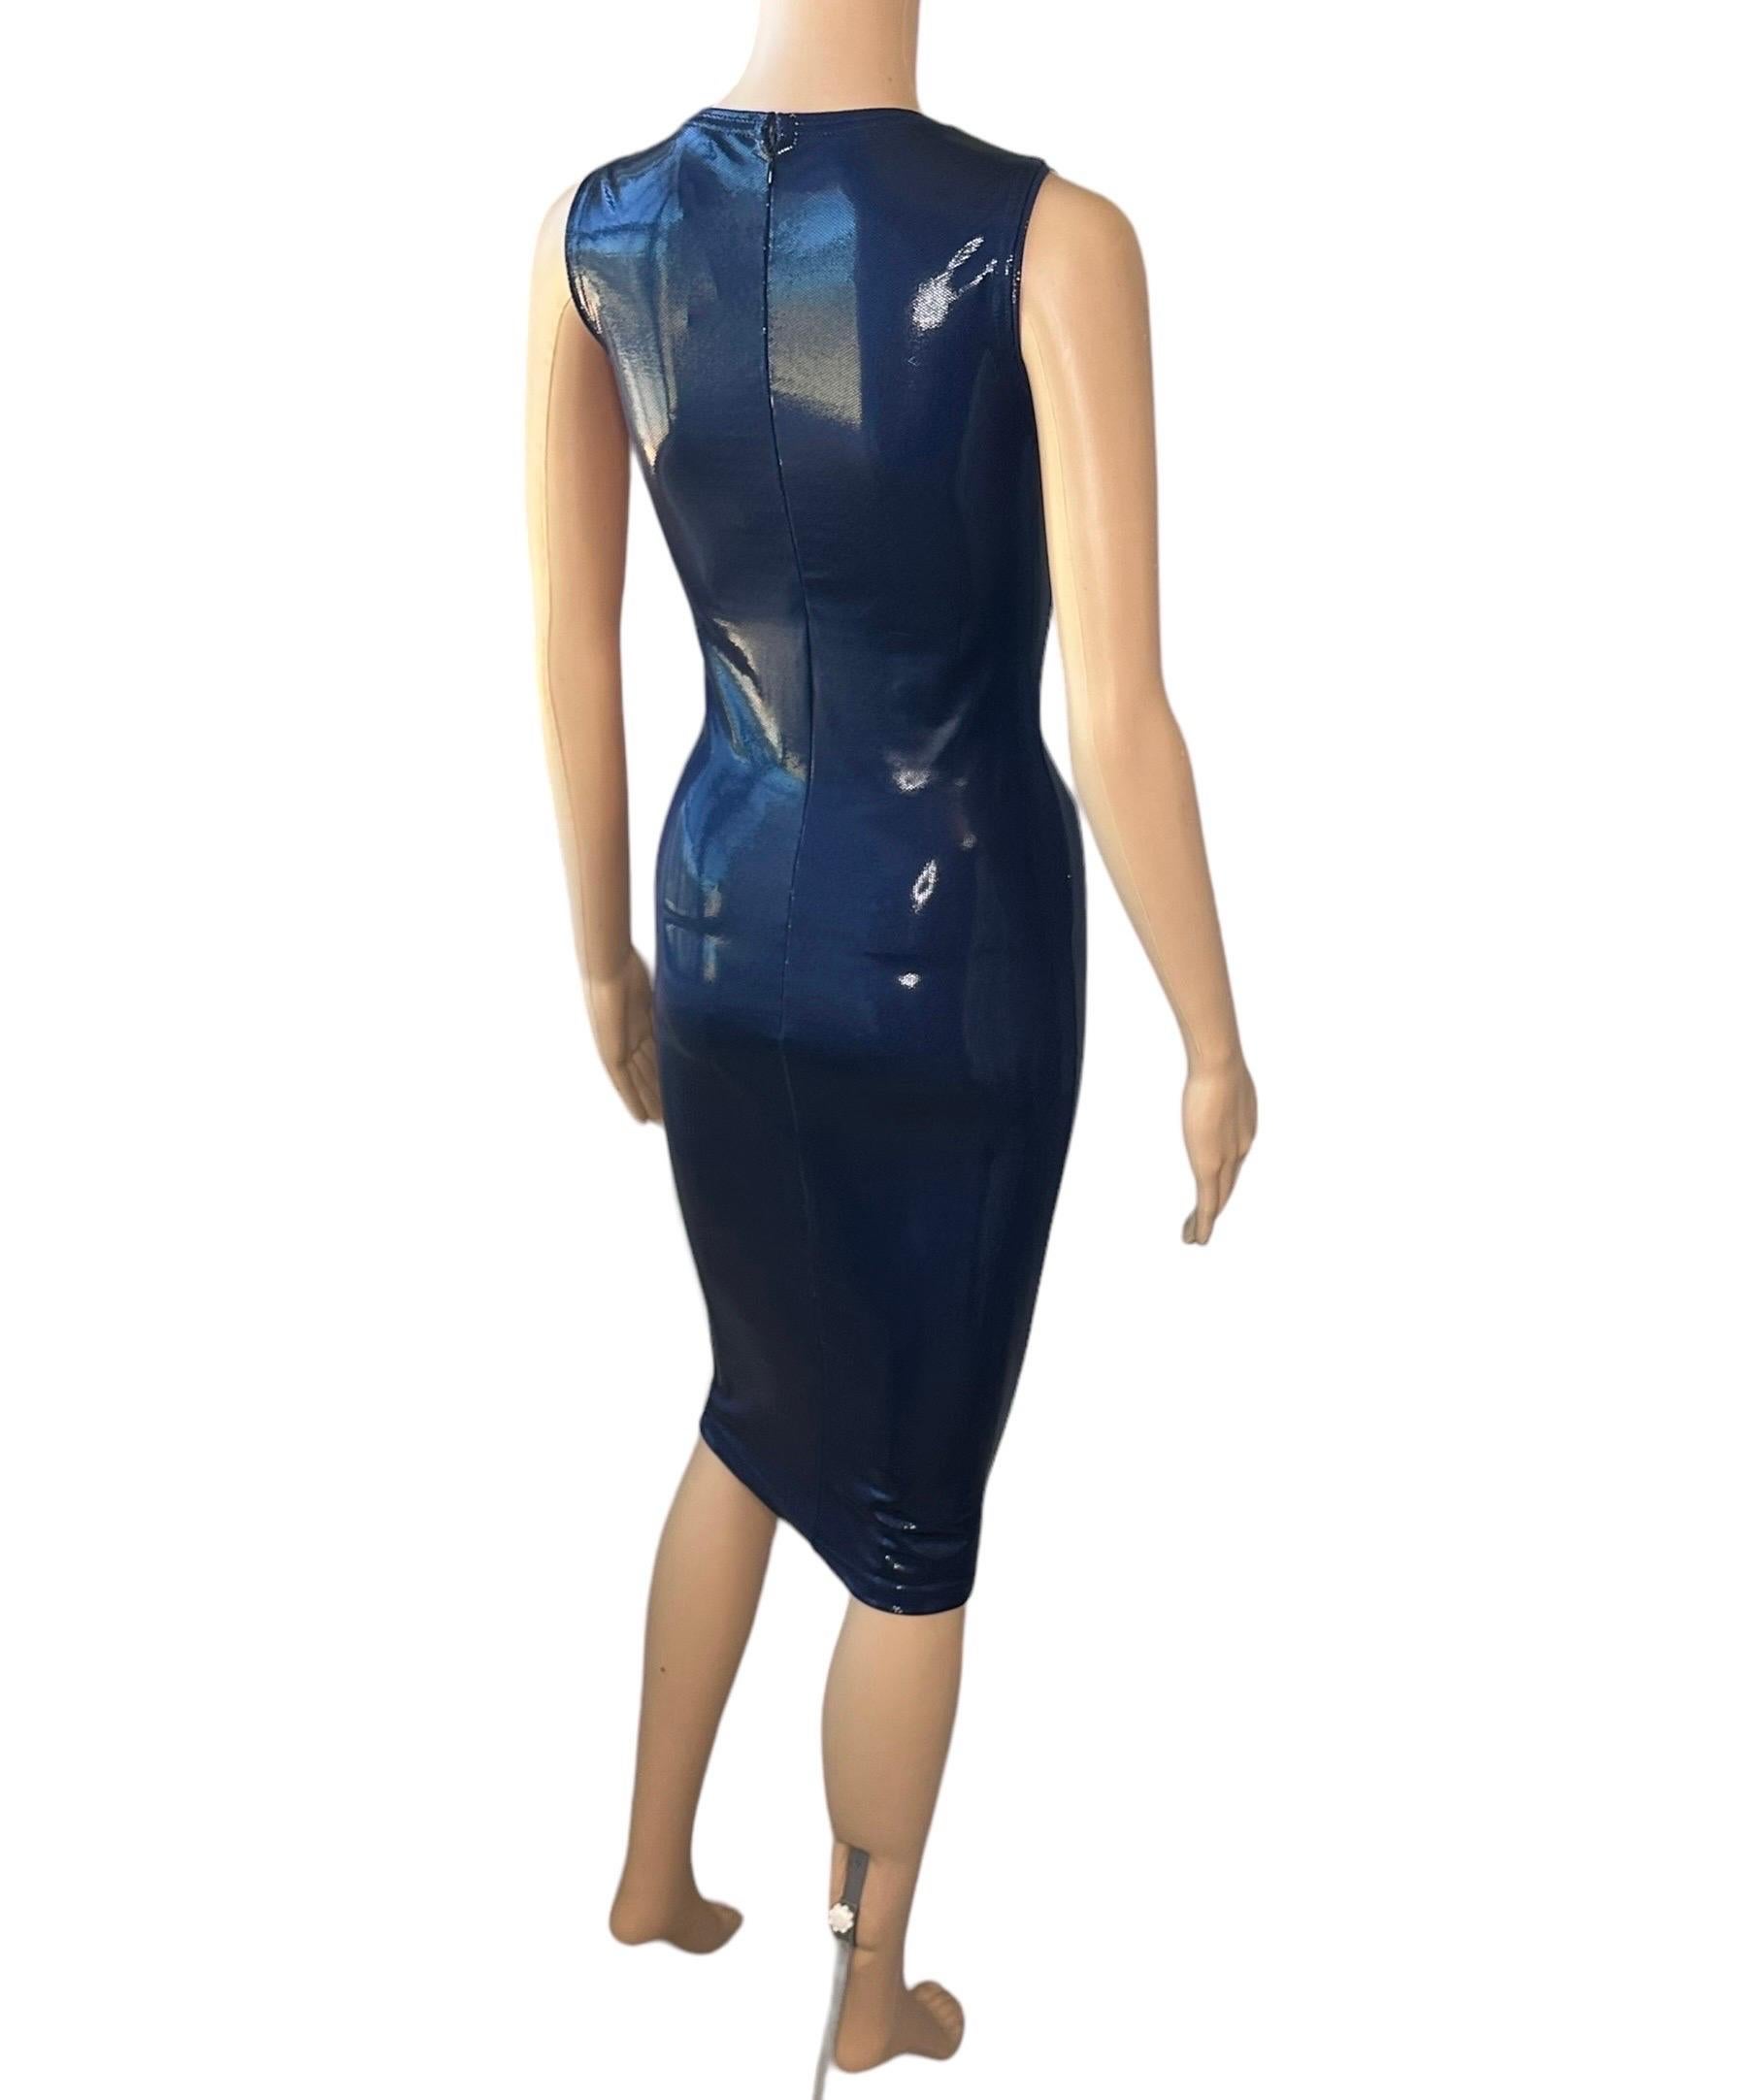 Gianni Versace c. 1994 Vintage Wet Look Stretch Bodycon Navy Blue Midi Dress 10